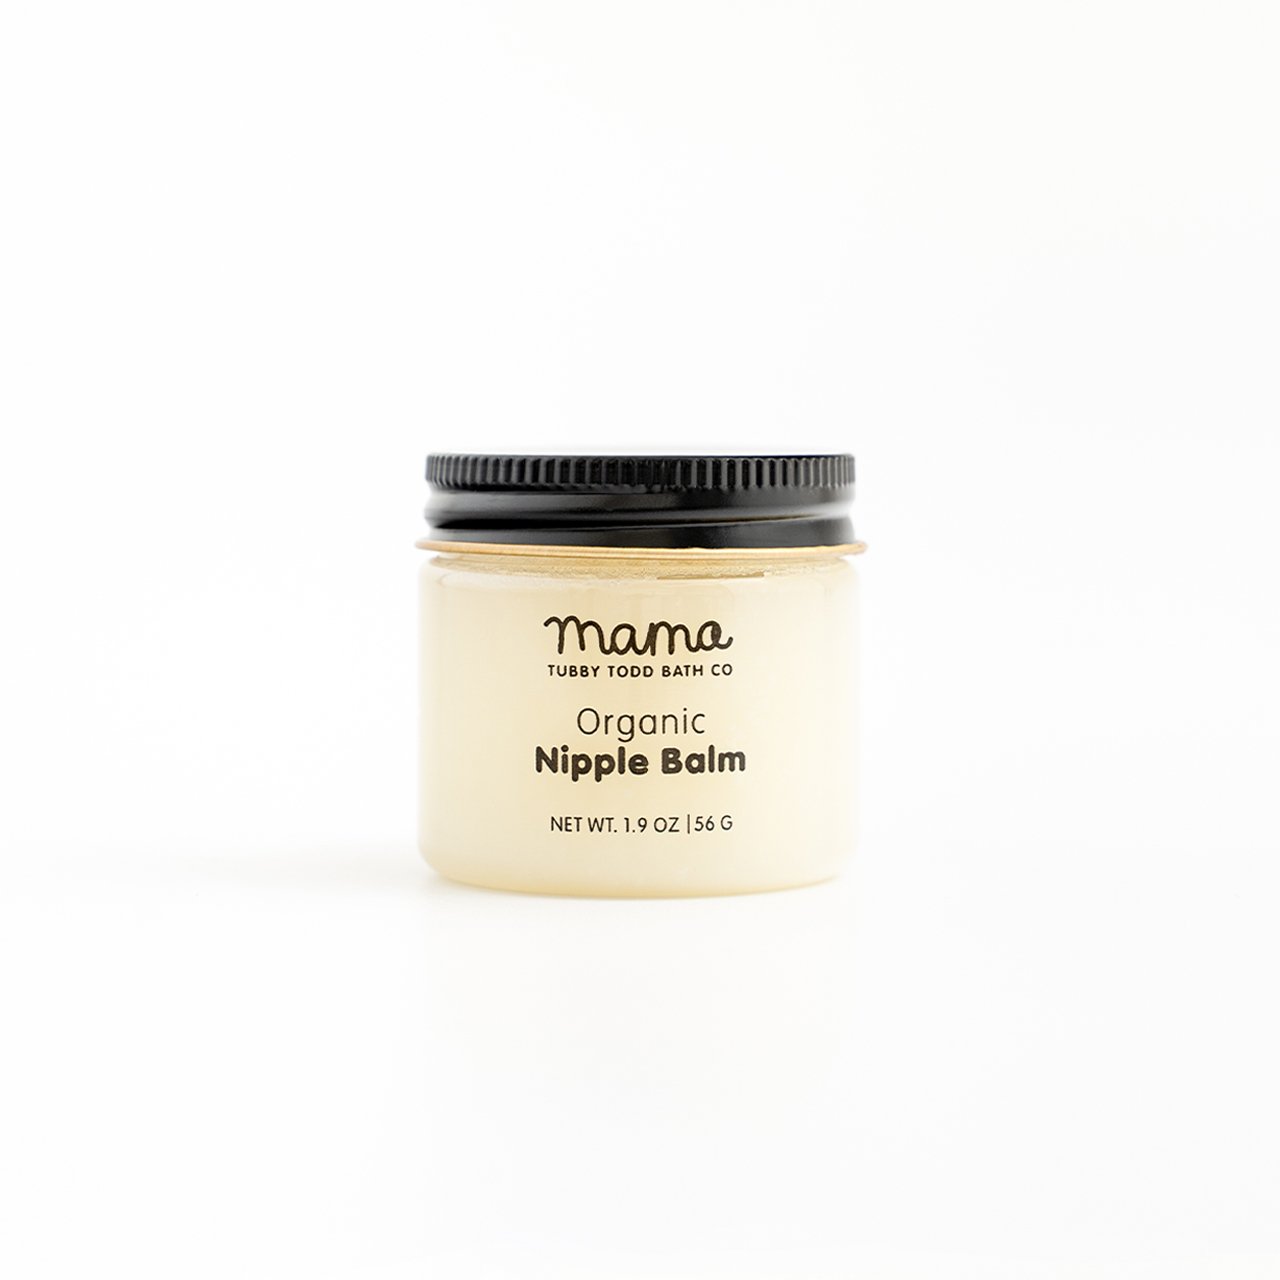 Mama Nipple Balm 2oz product image